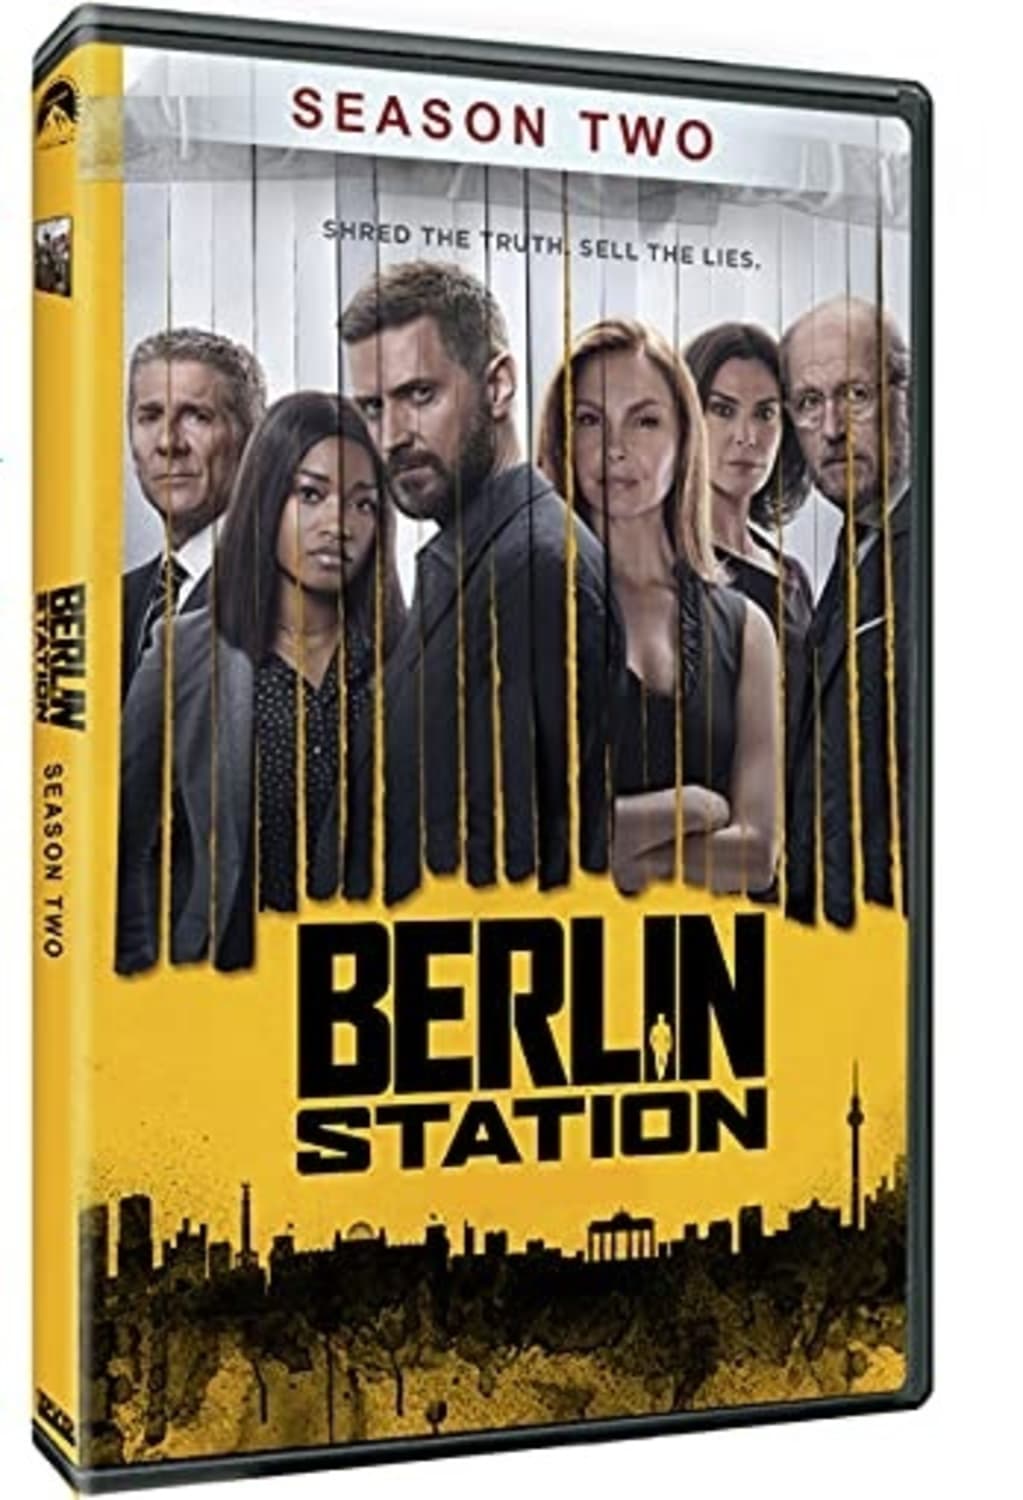 Berlin Station: Season Two (DVD) on MovieShack